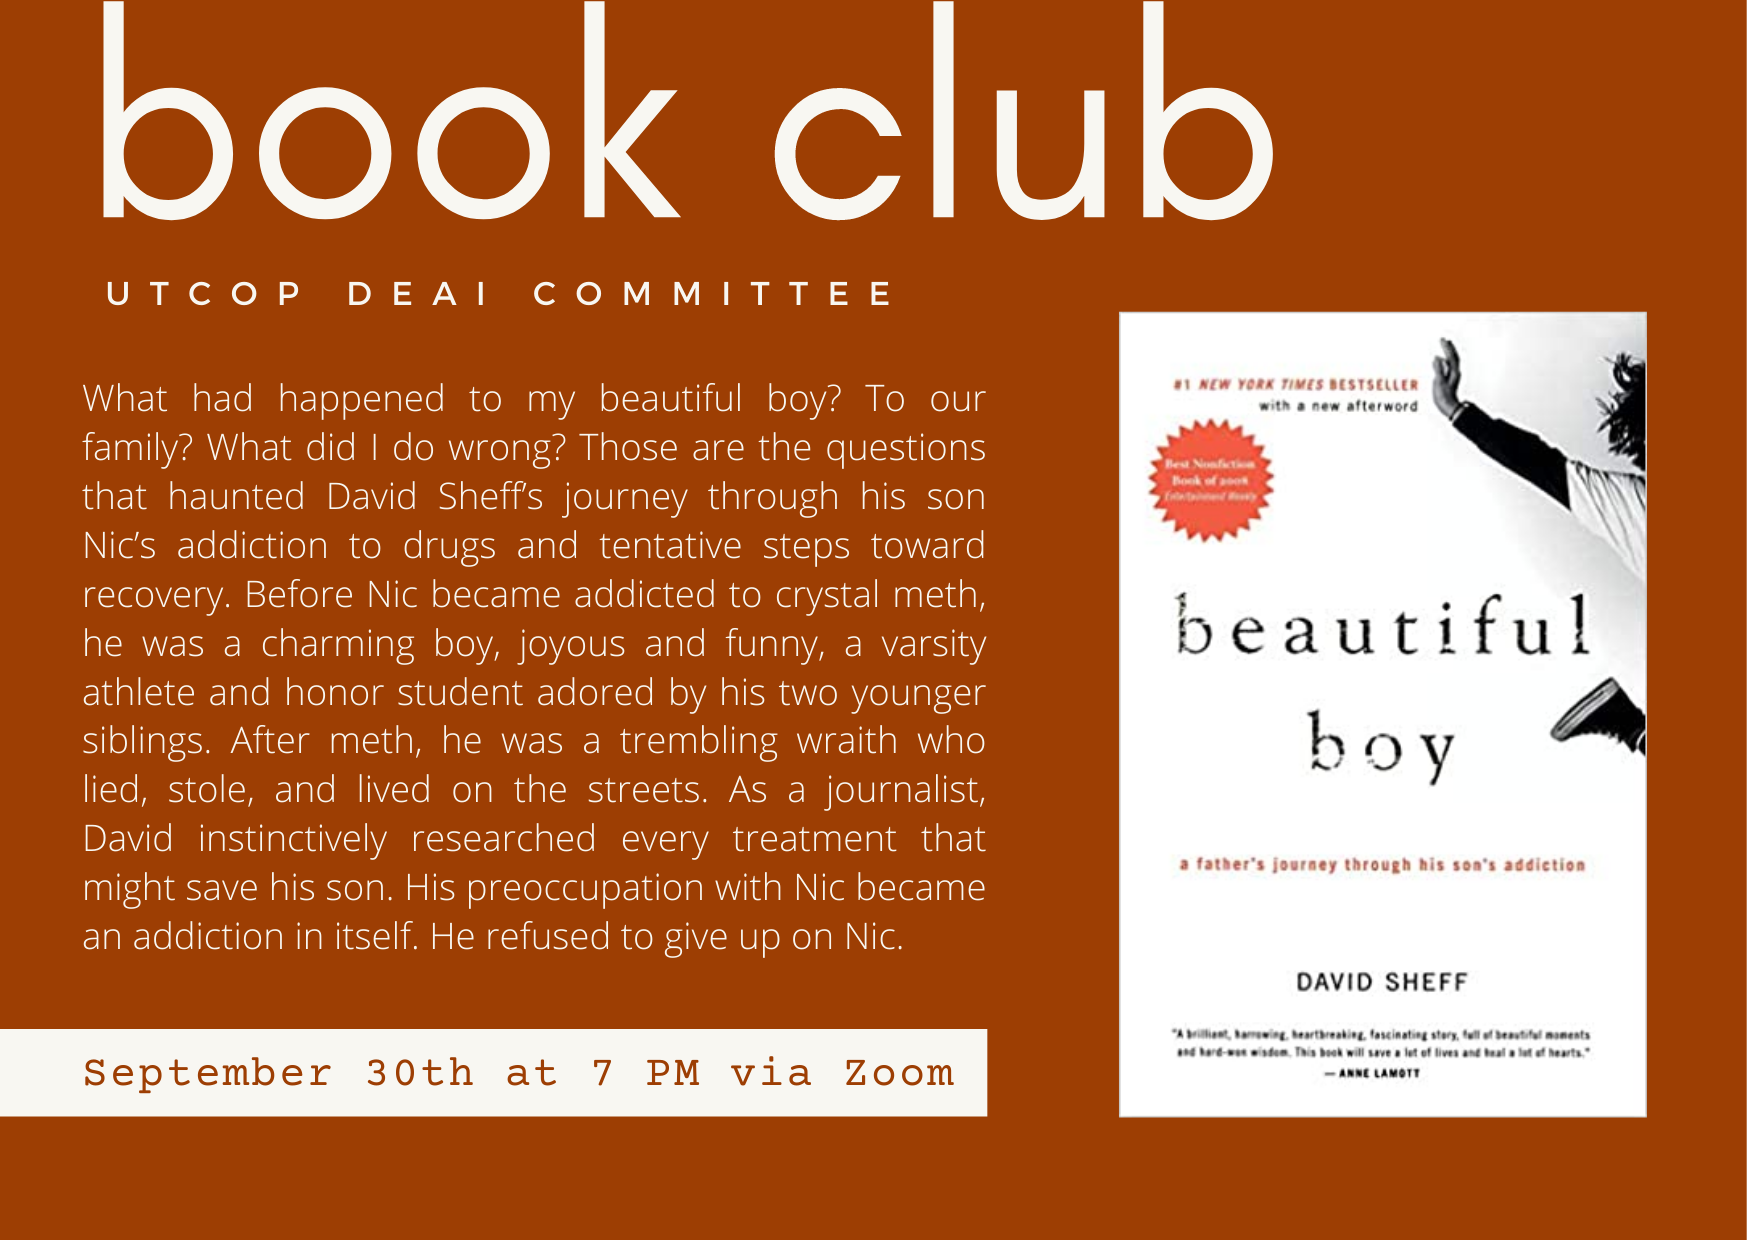 Global Social Club Book Club flyer for September 2021 - Beautiful Boy by David Sheff